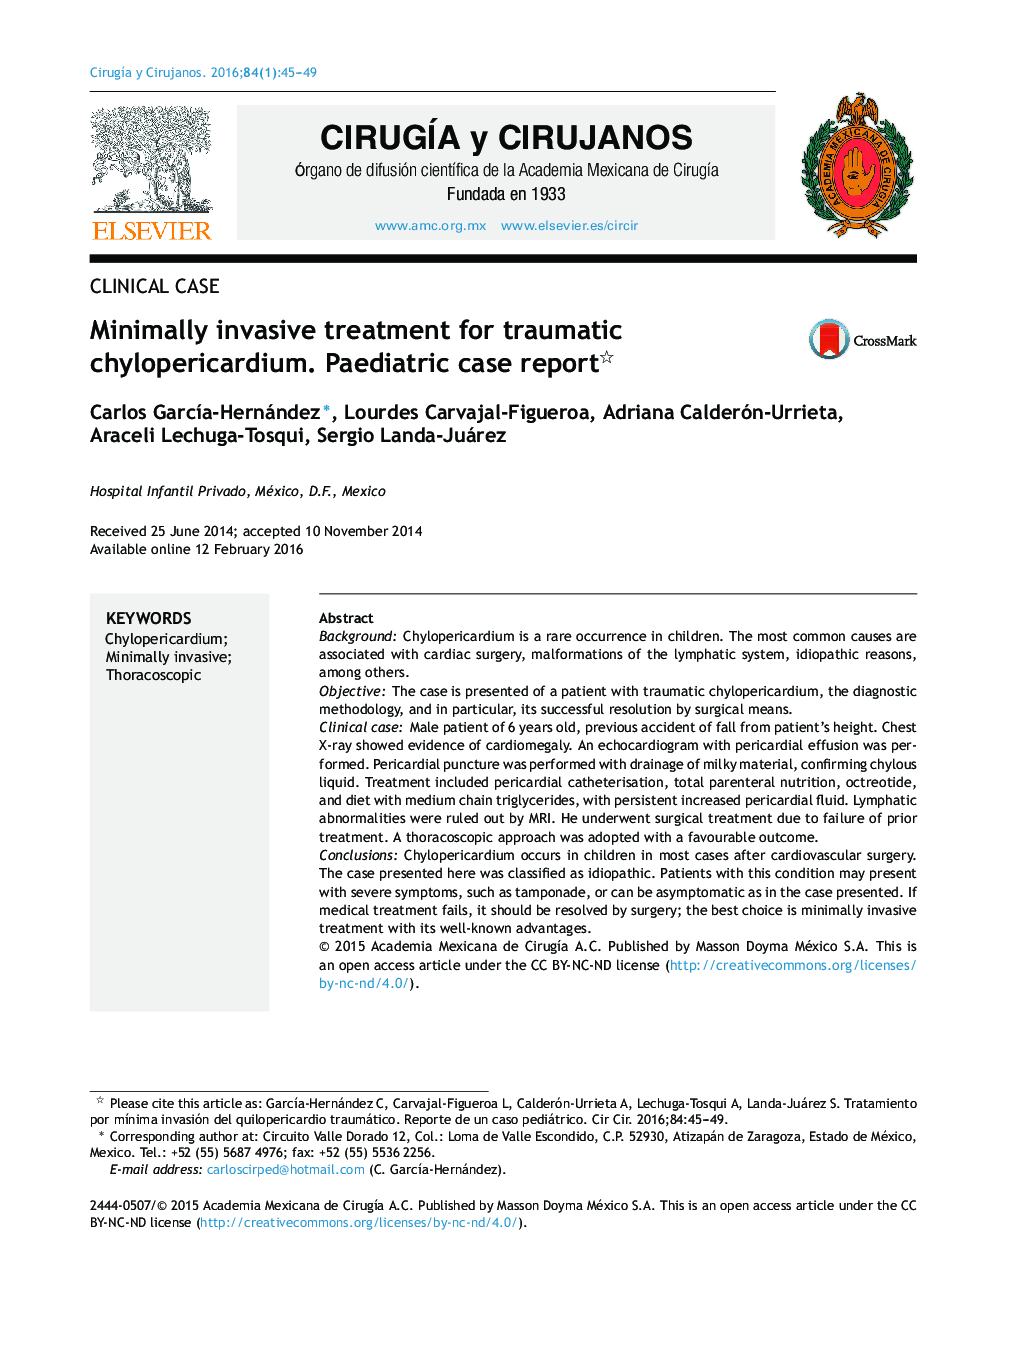 Minimally invasive treatment for traumatic chylopericardium. Paediatric case report 